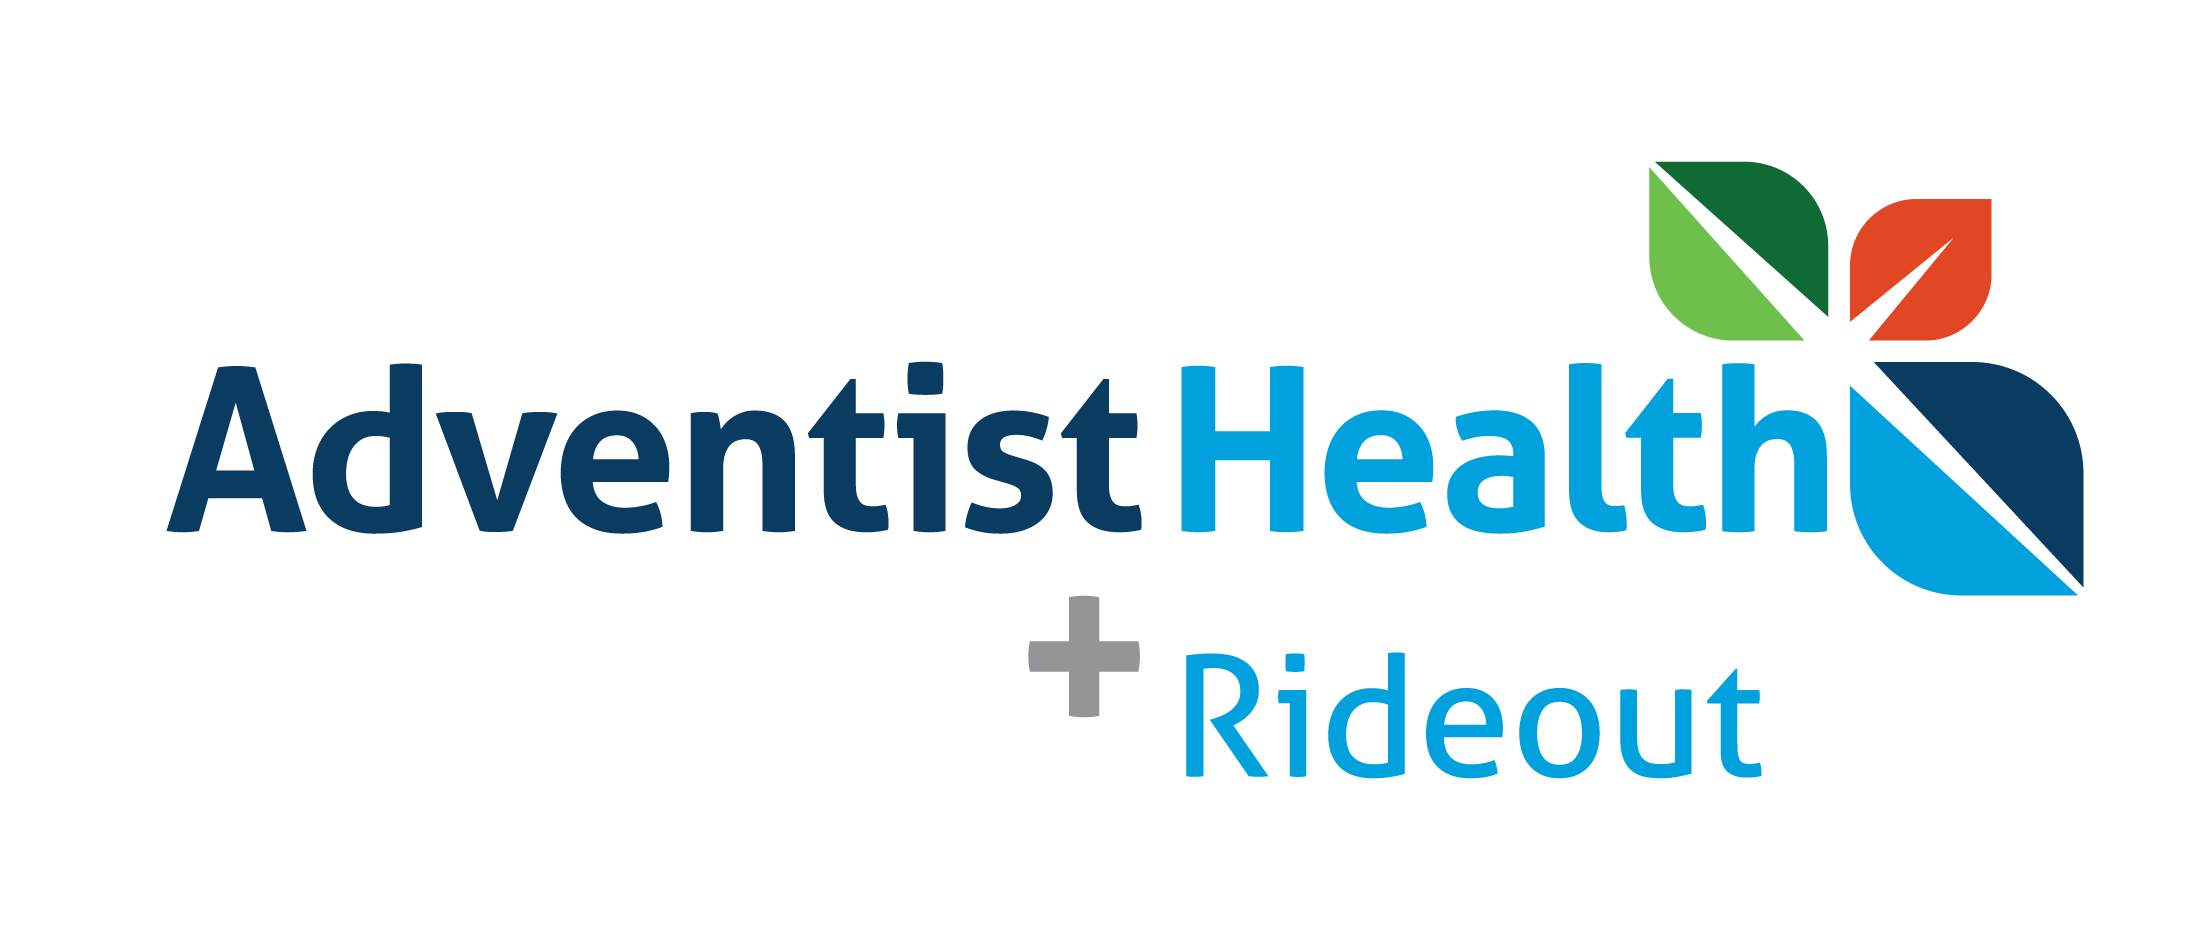 B. Adventist Health & Rideout (Presenting Hospital)